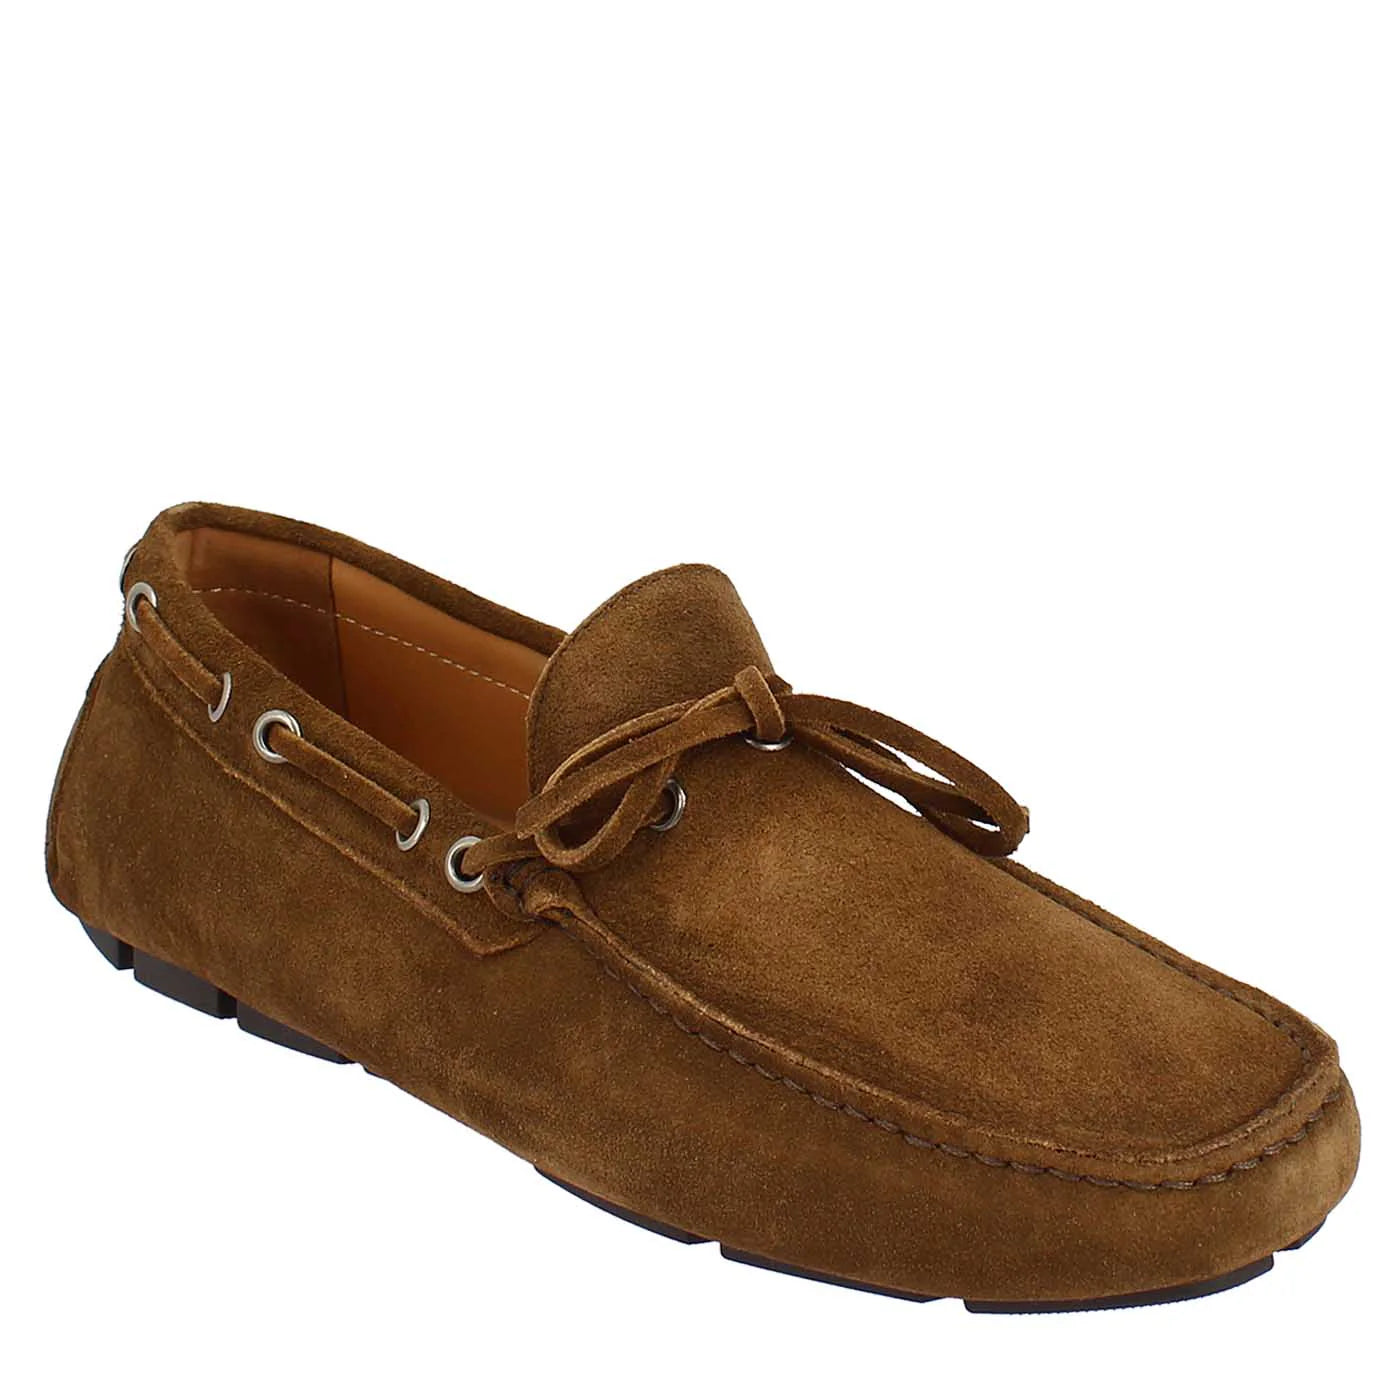 Handmade Carshoe Loafers in brown suede